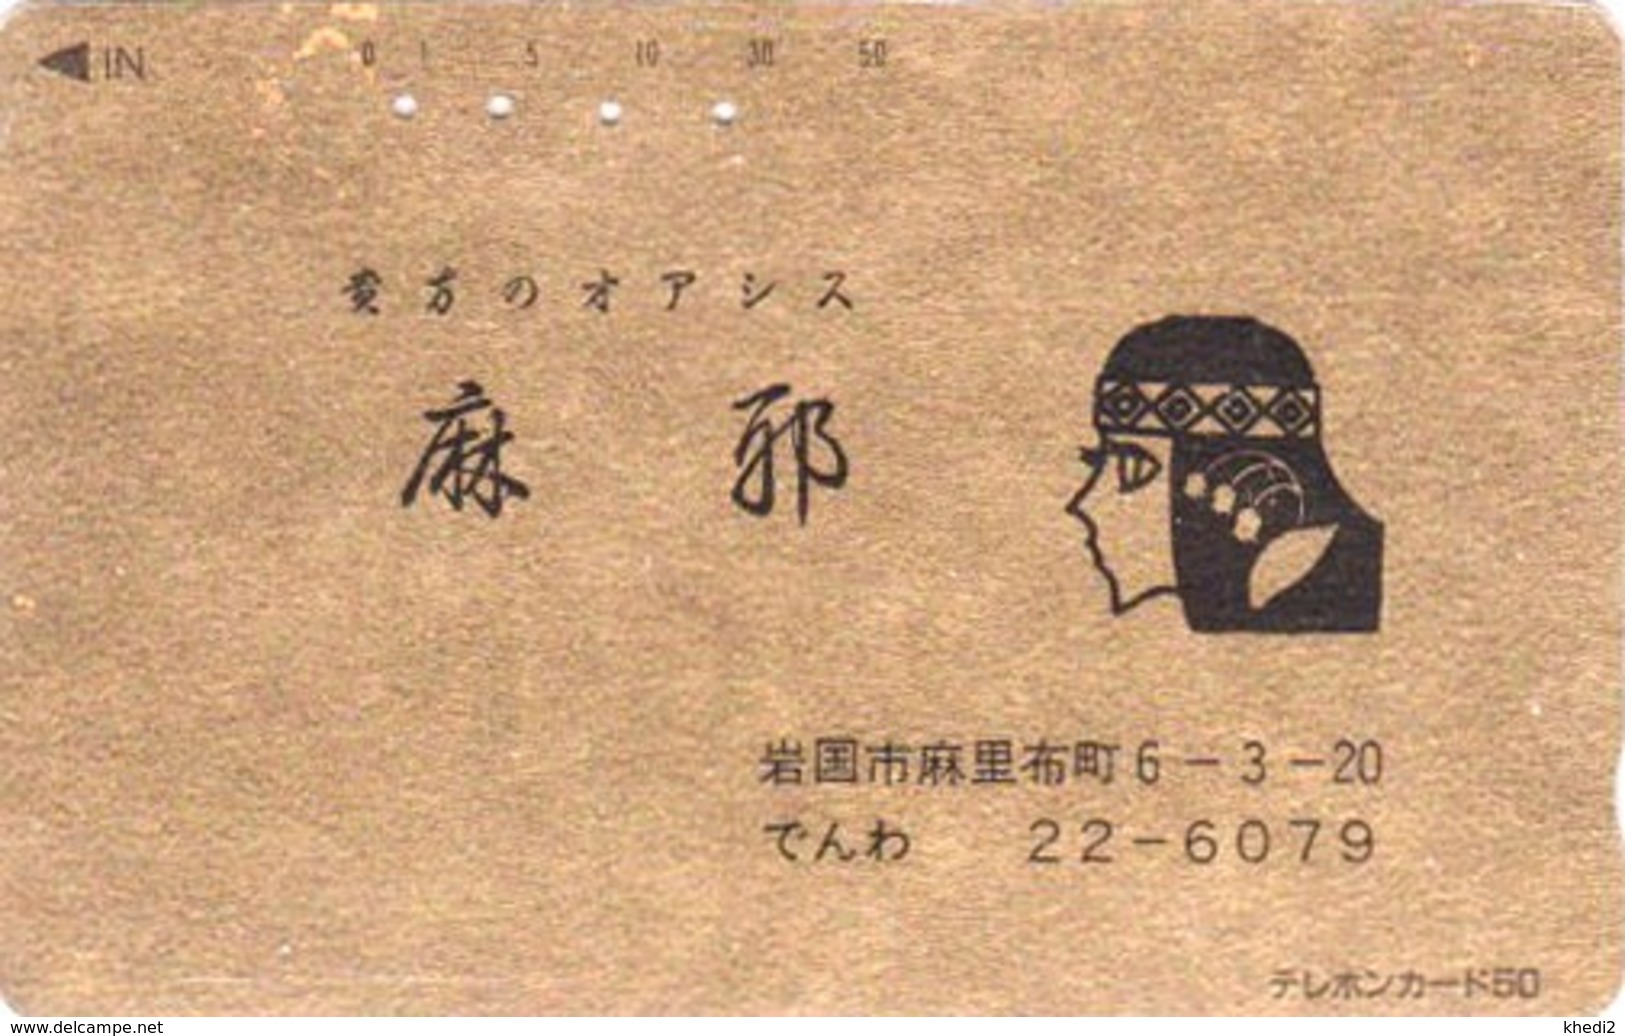 Télécarte DOREE Japon / 110-118 - EGYPTE - CLEOPATRE Pub Snack Oasis - EGYPT Rel Japan GOLD Phonecard - MD 232 - Kultur